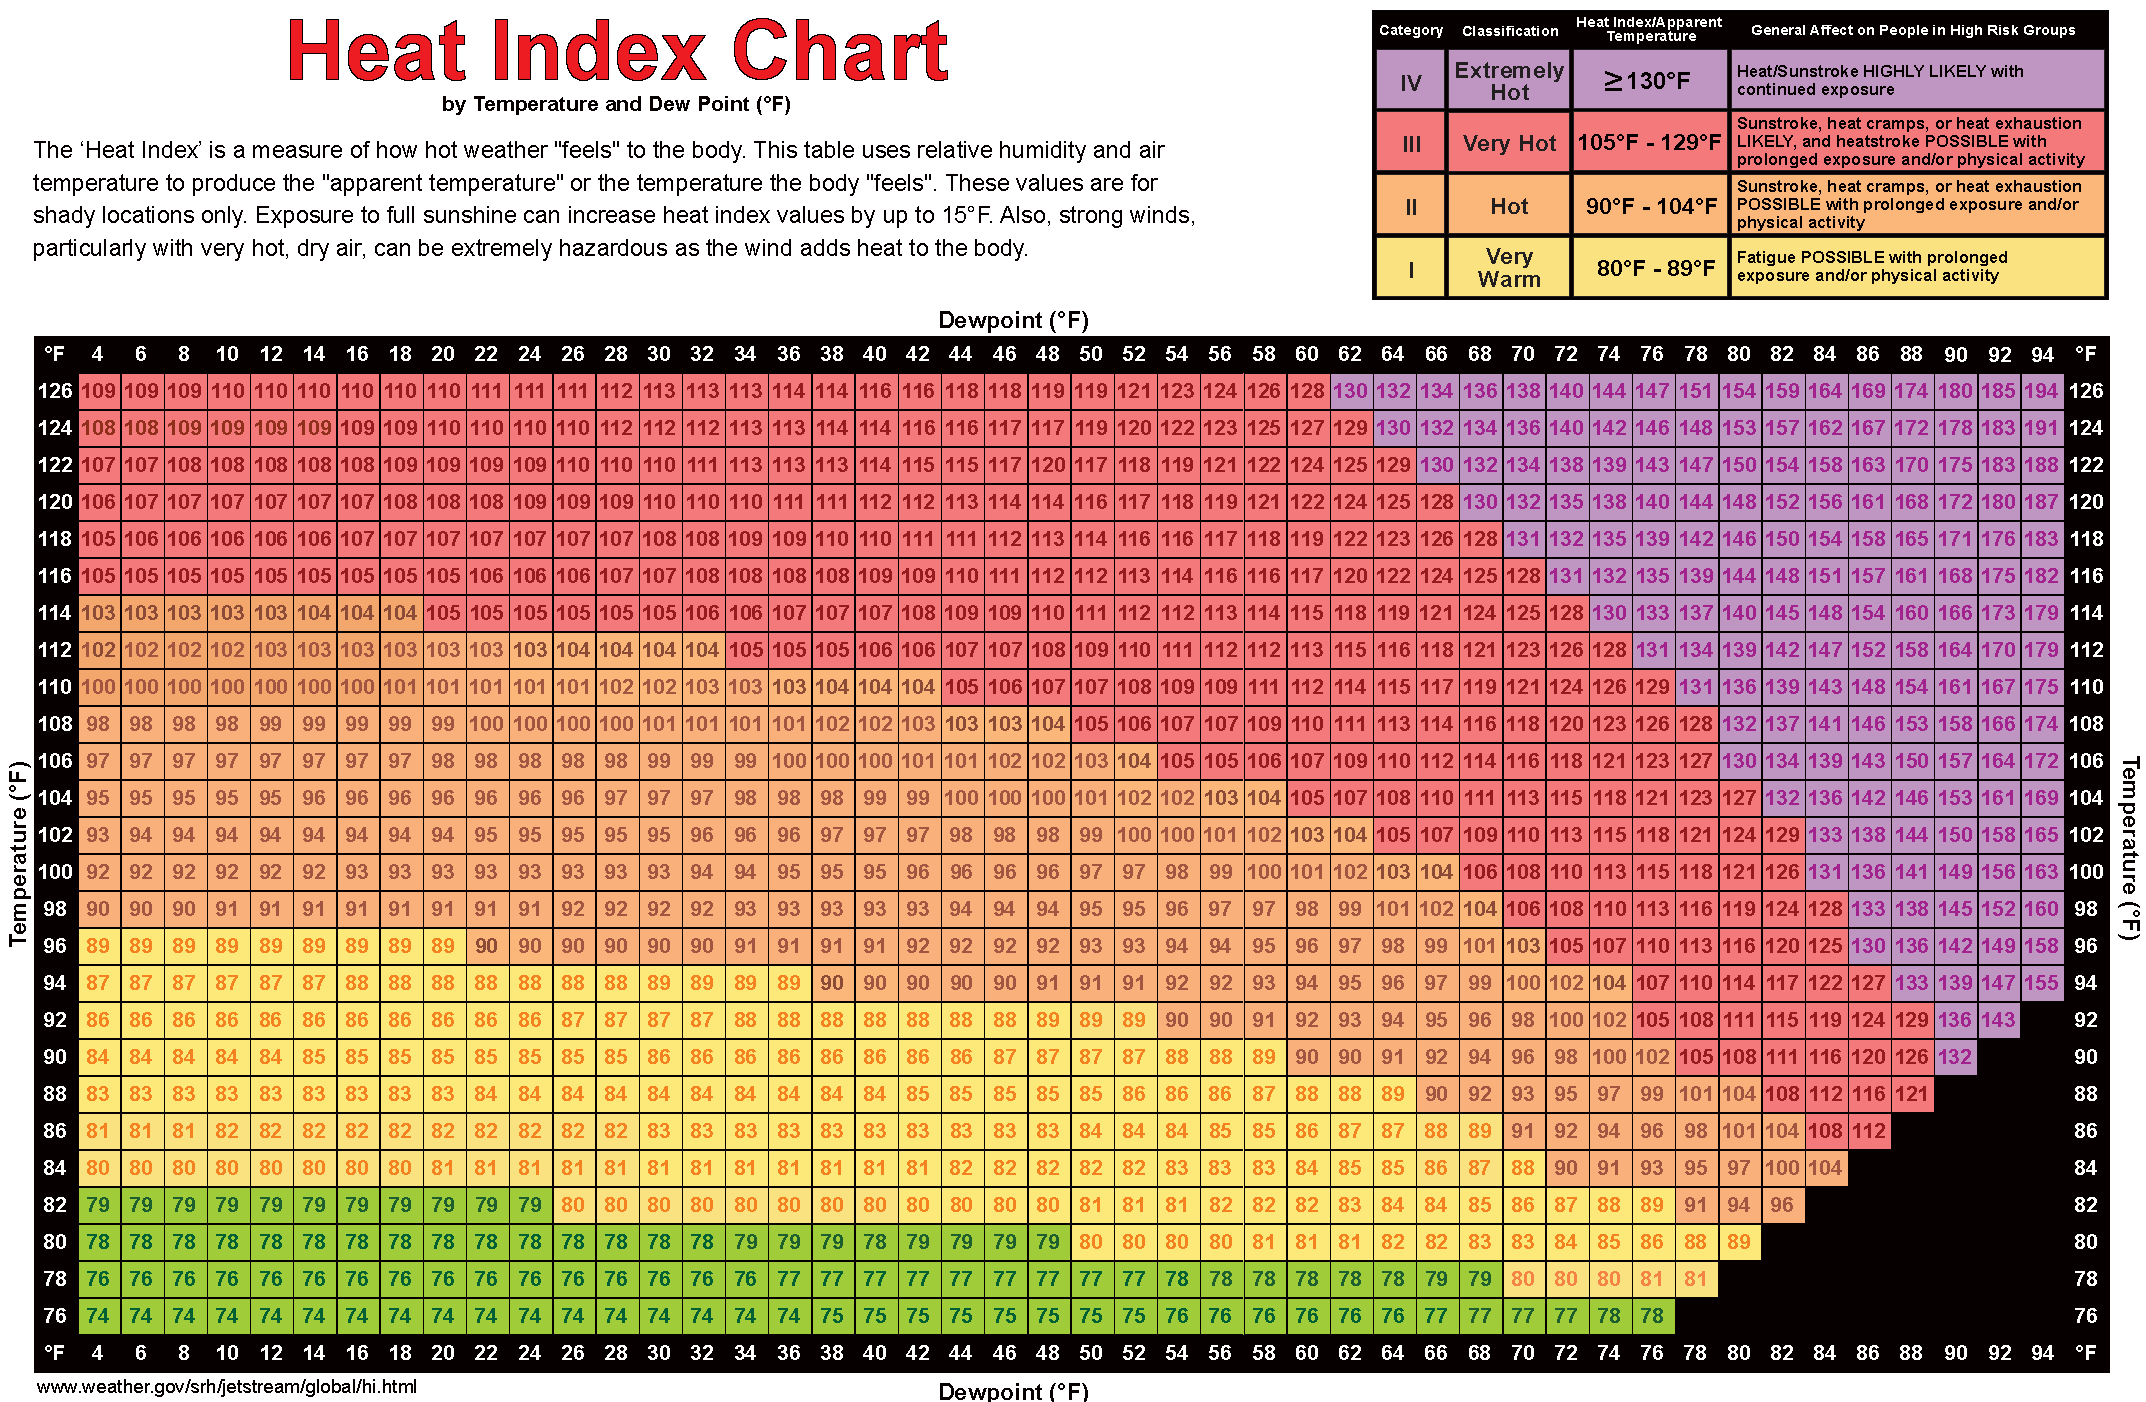 Humidex Chart